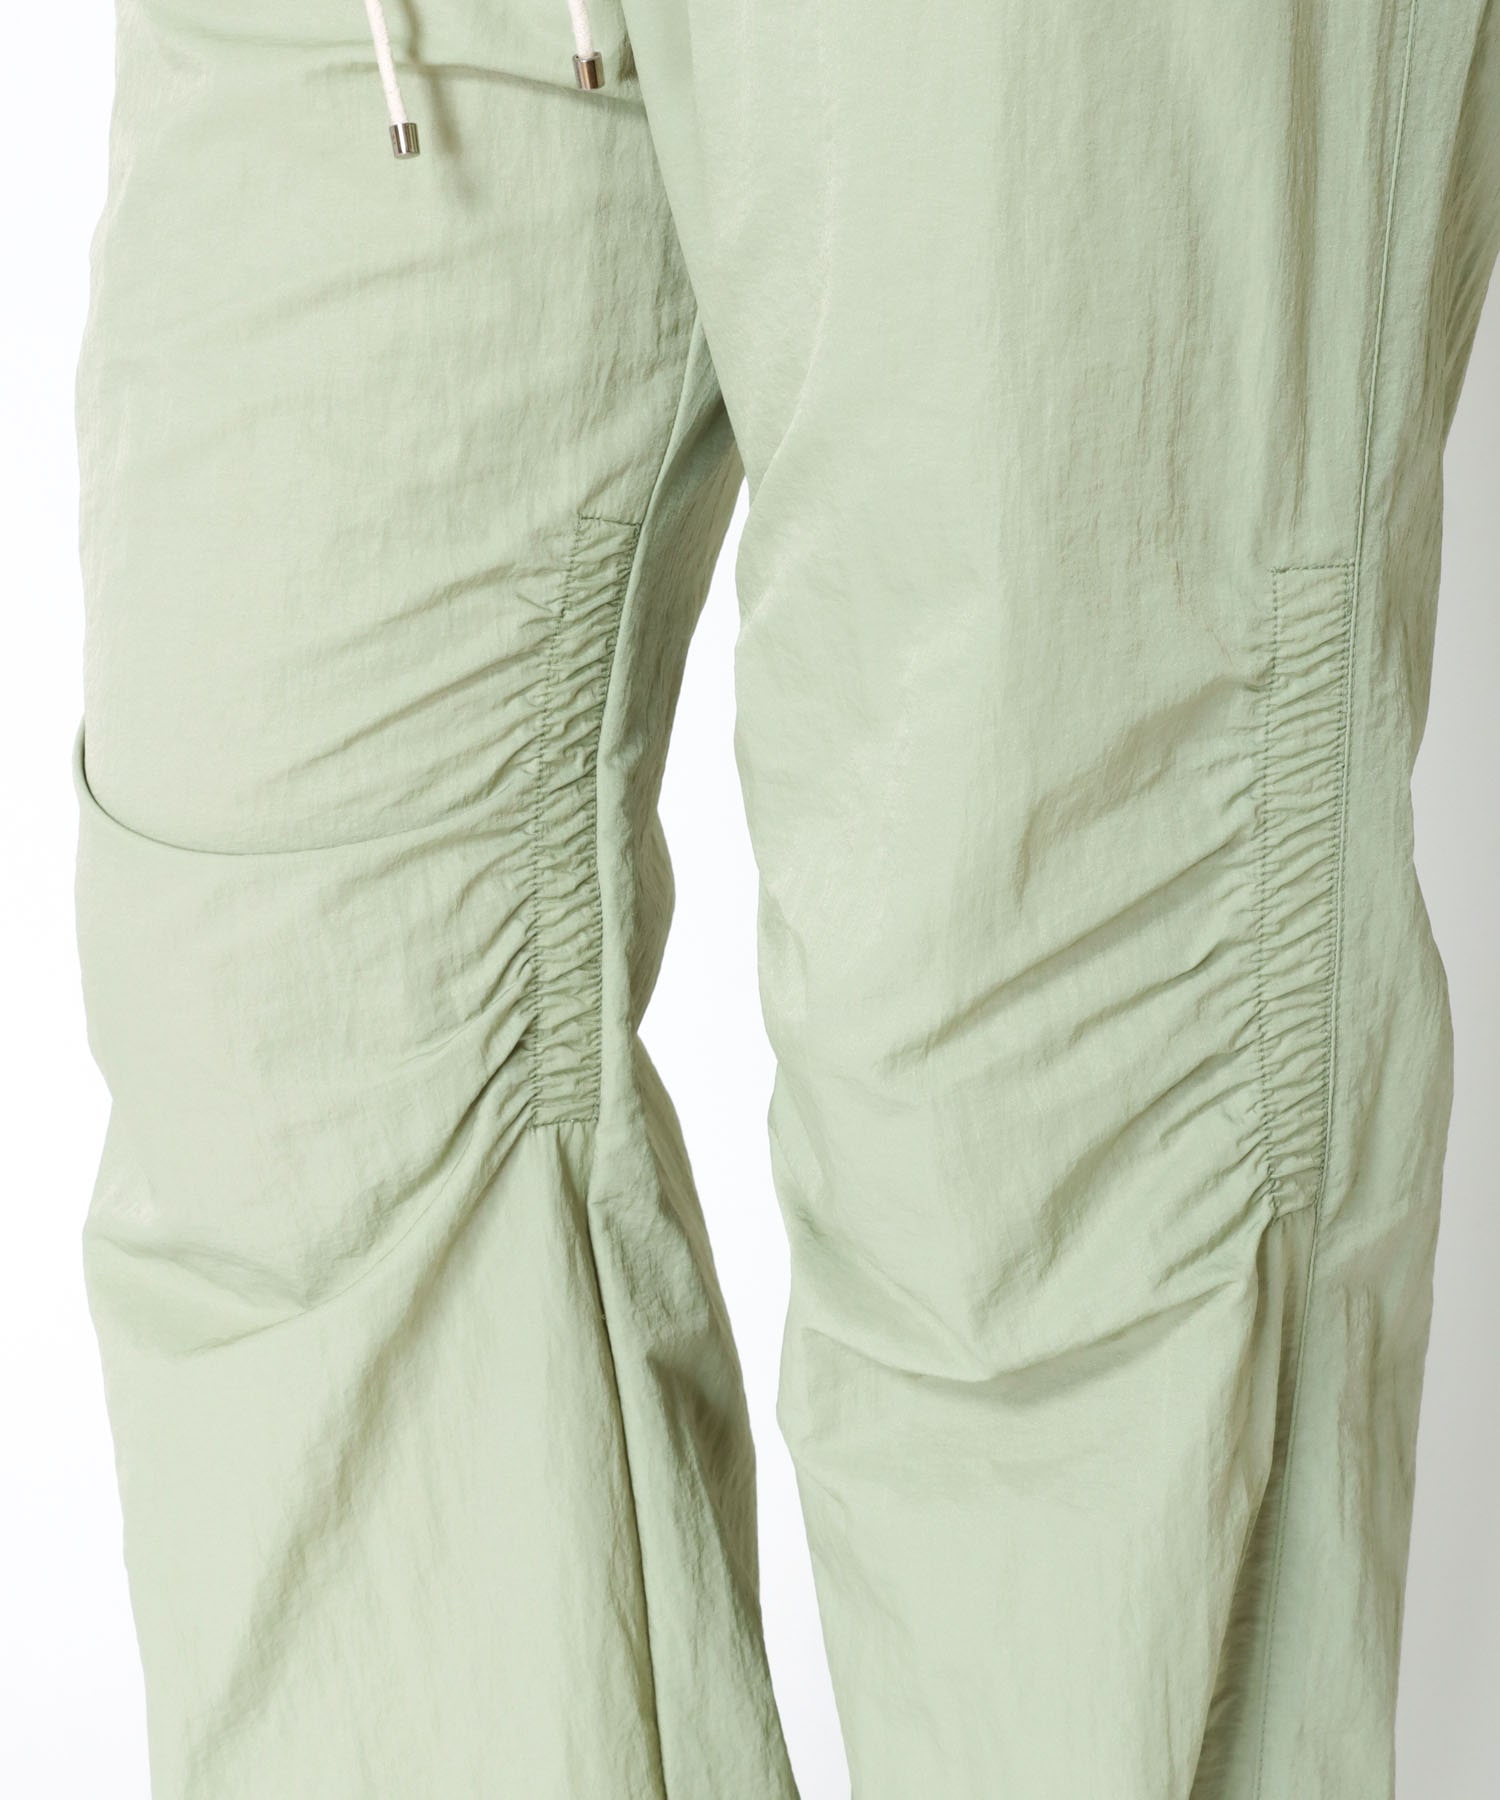 washer nylon gather design pants